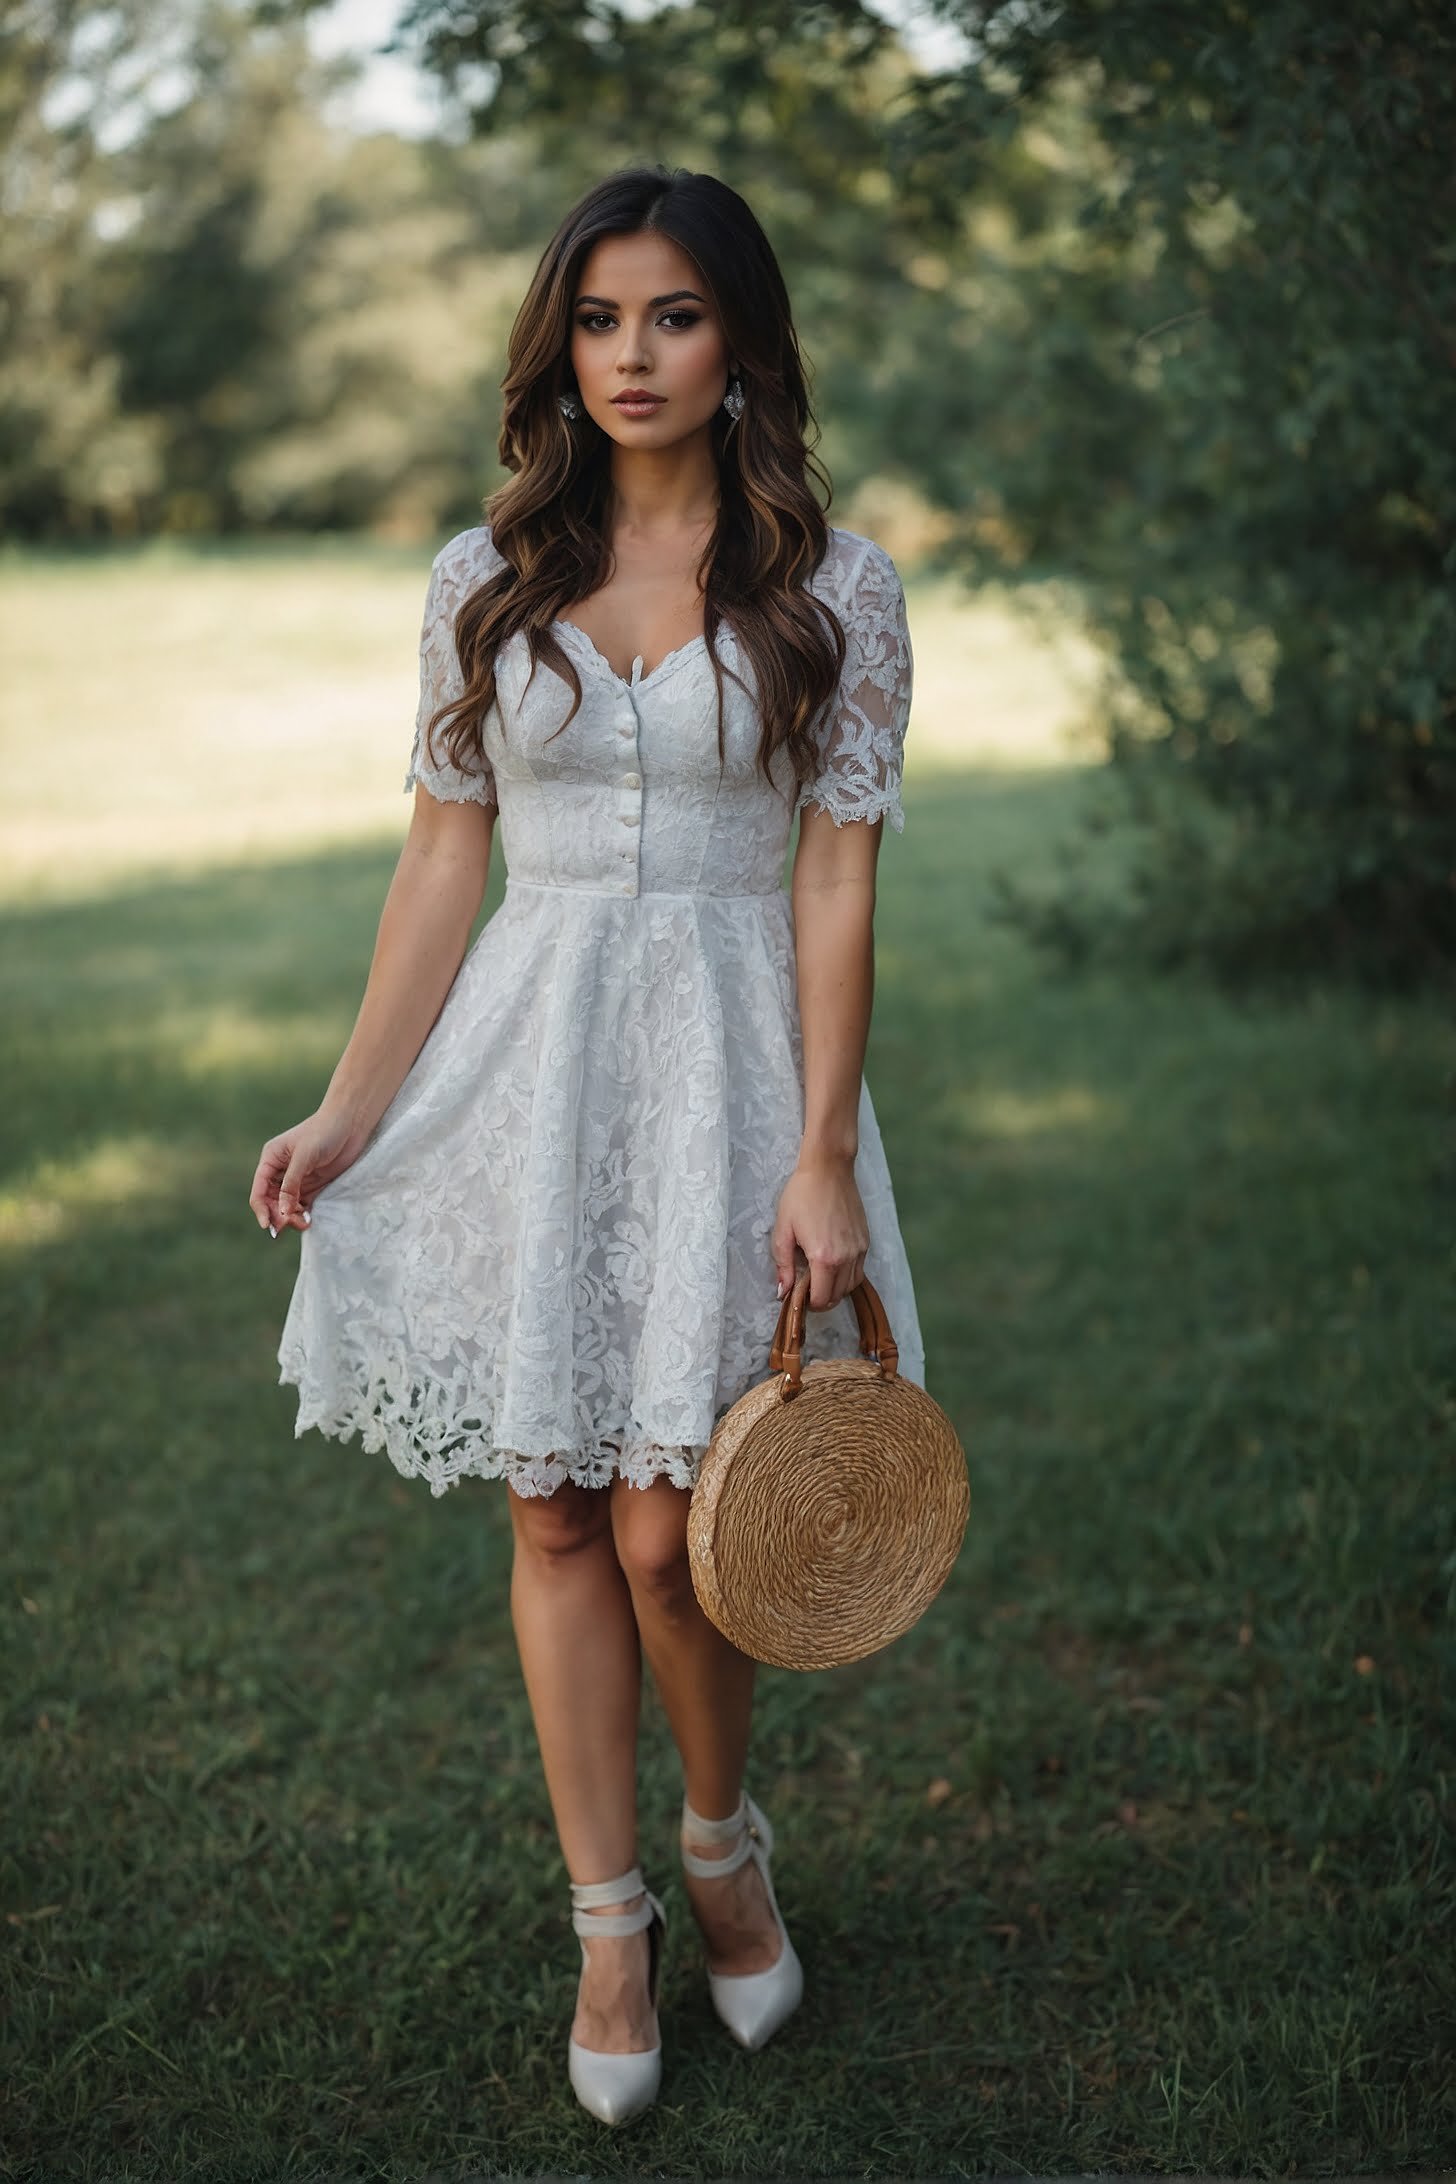 Delicate Lace White Dress - Dreamy Summer Affair